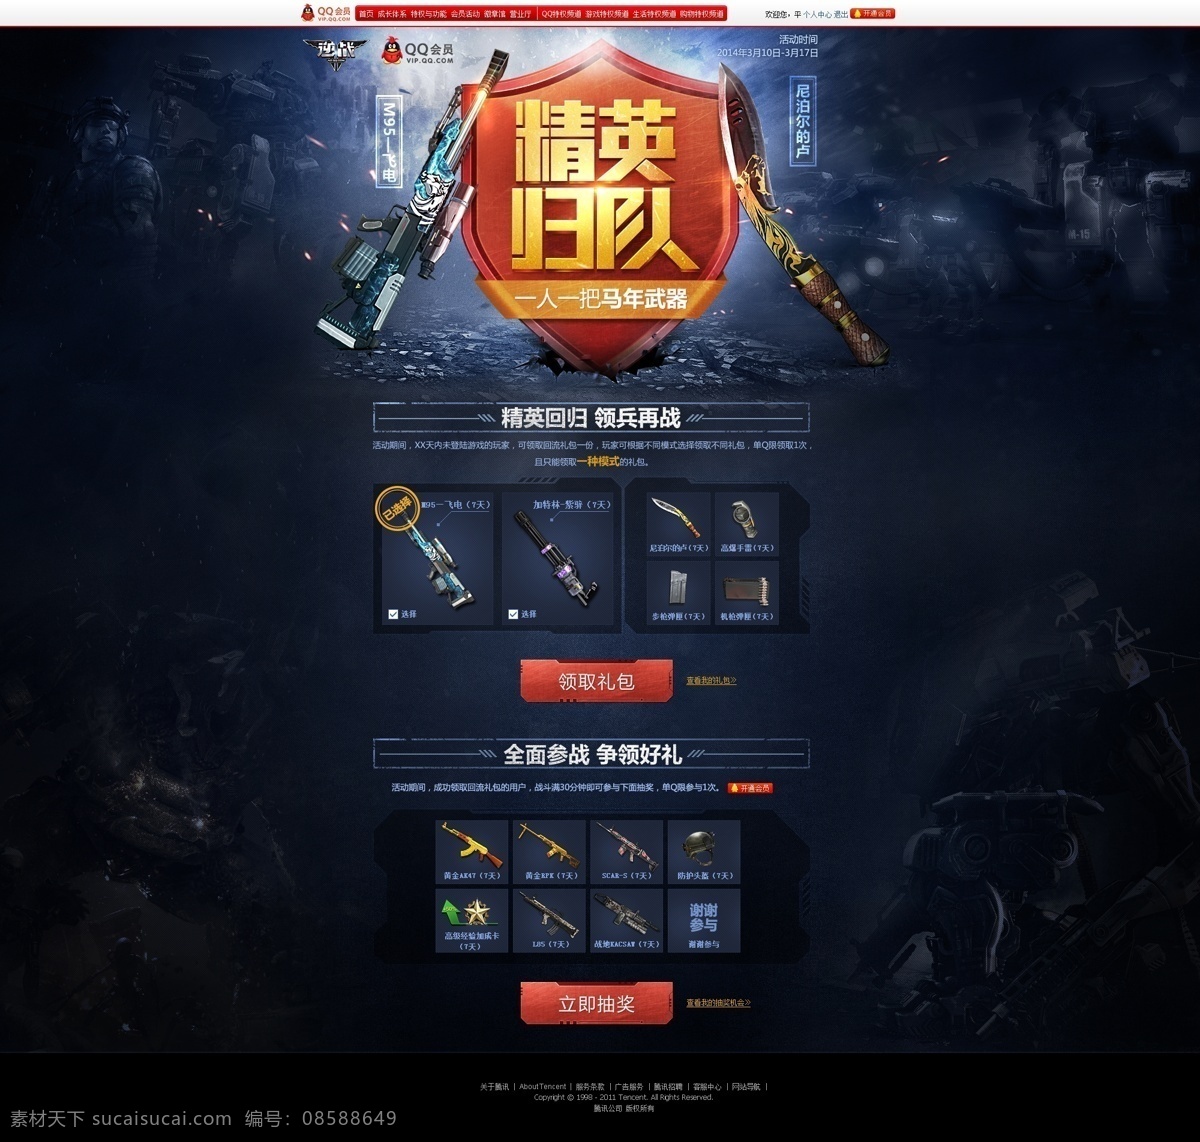 cf精英归队 cf 穿越火线 游戏 专题 专题网页 网页 web 界面设计 中文模板